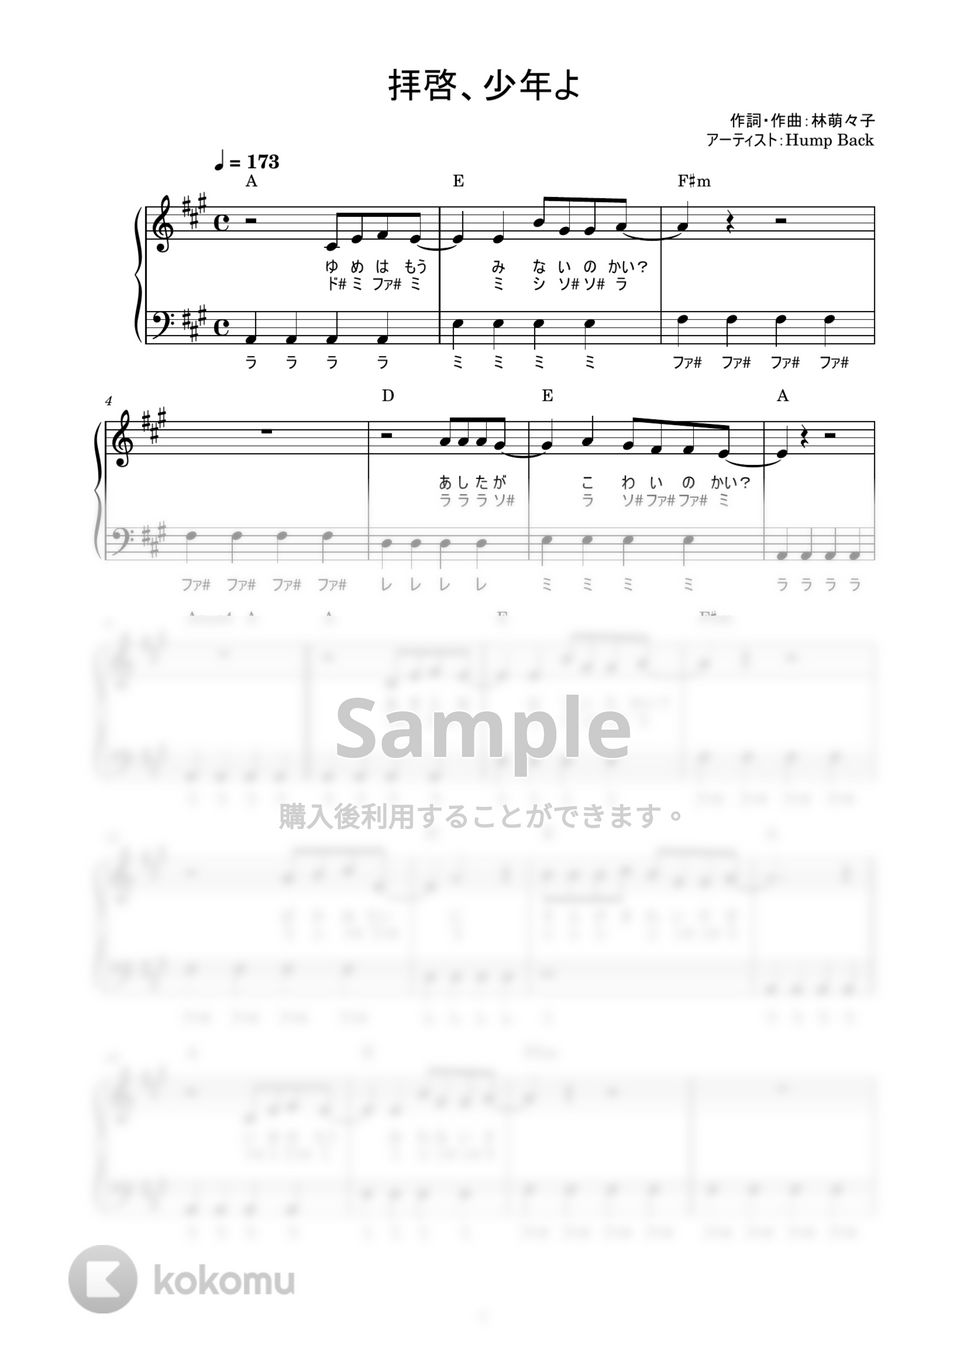 Hump Back - 拝啓、少年よ (かんたん / 歌詞付き / ドレミ付き / 初心者) by piano.tokyo